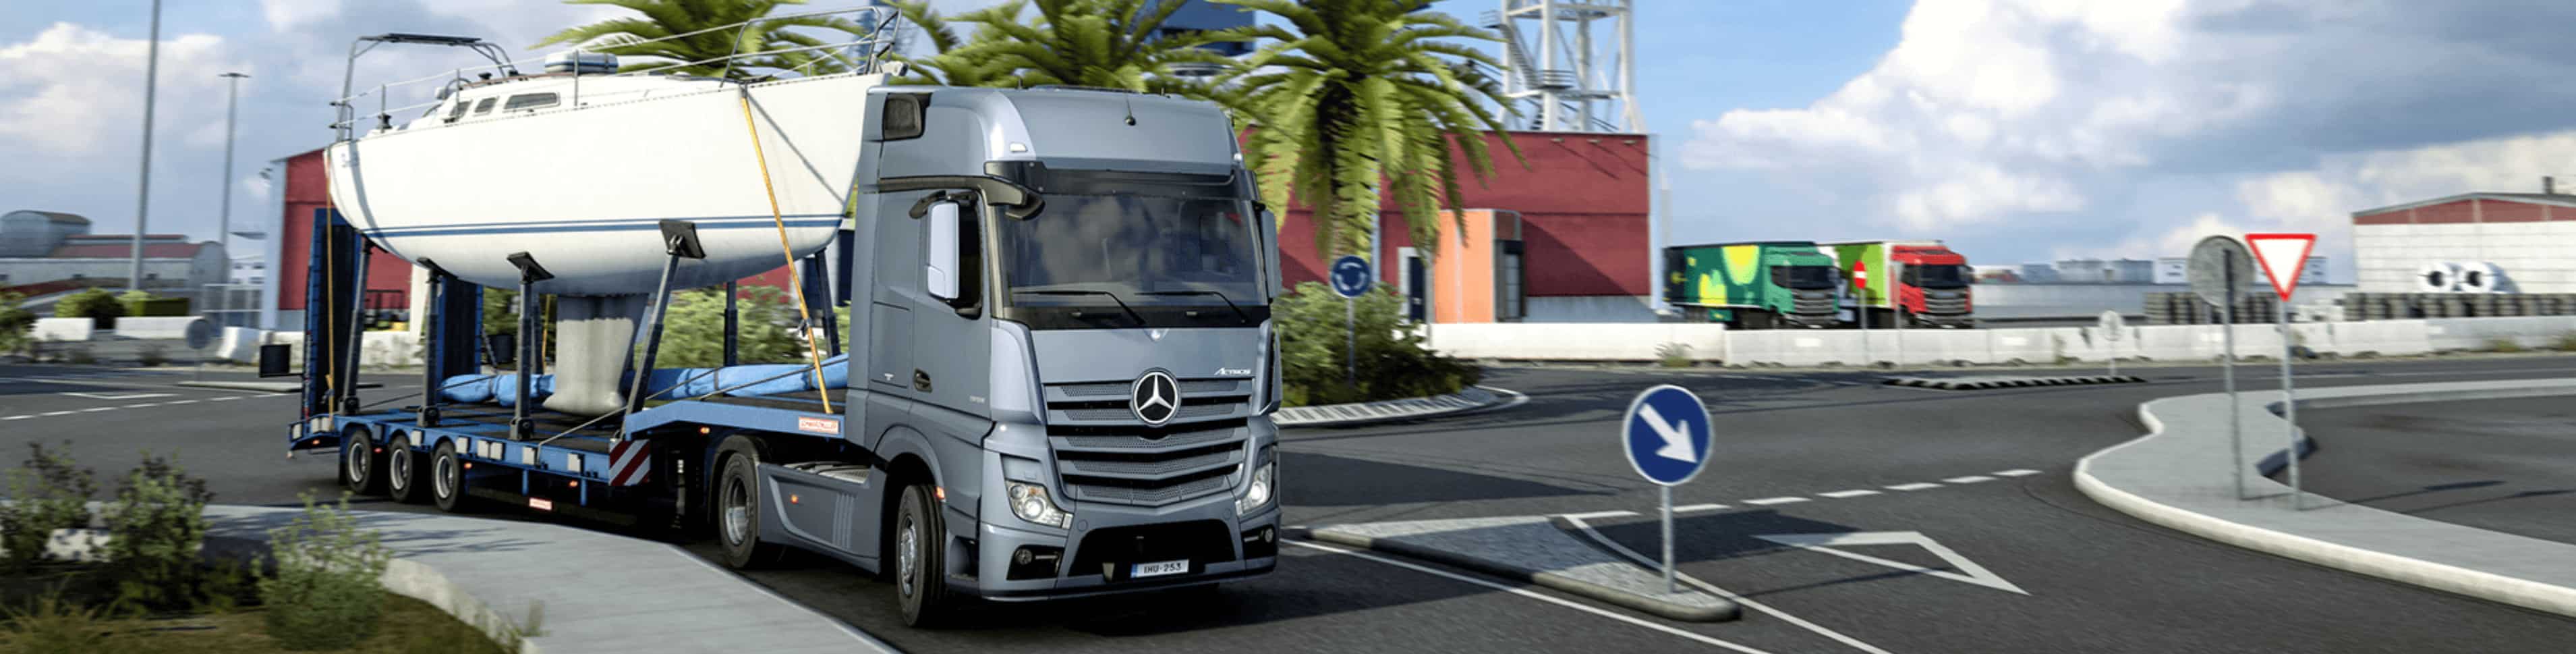 Euro Truck Simulator 2 Cheats & Cheat Codes for Microsoft Windows